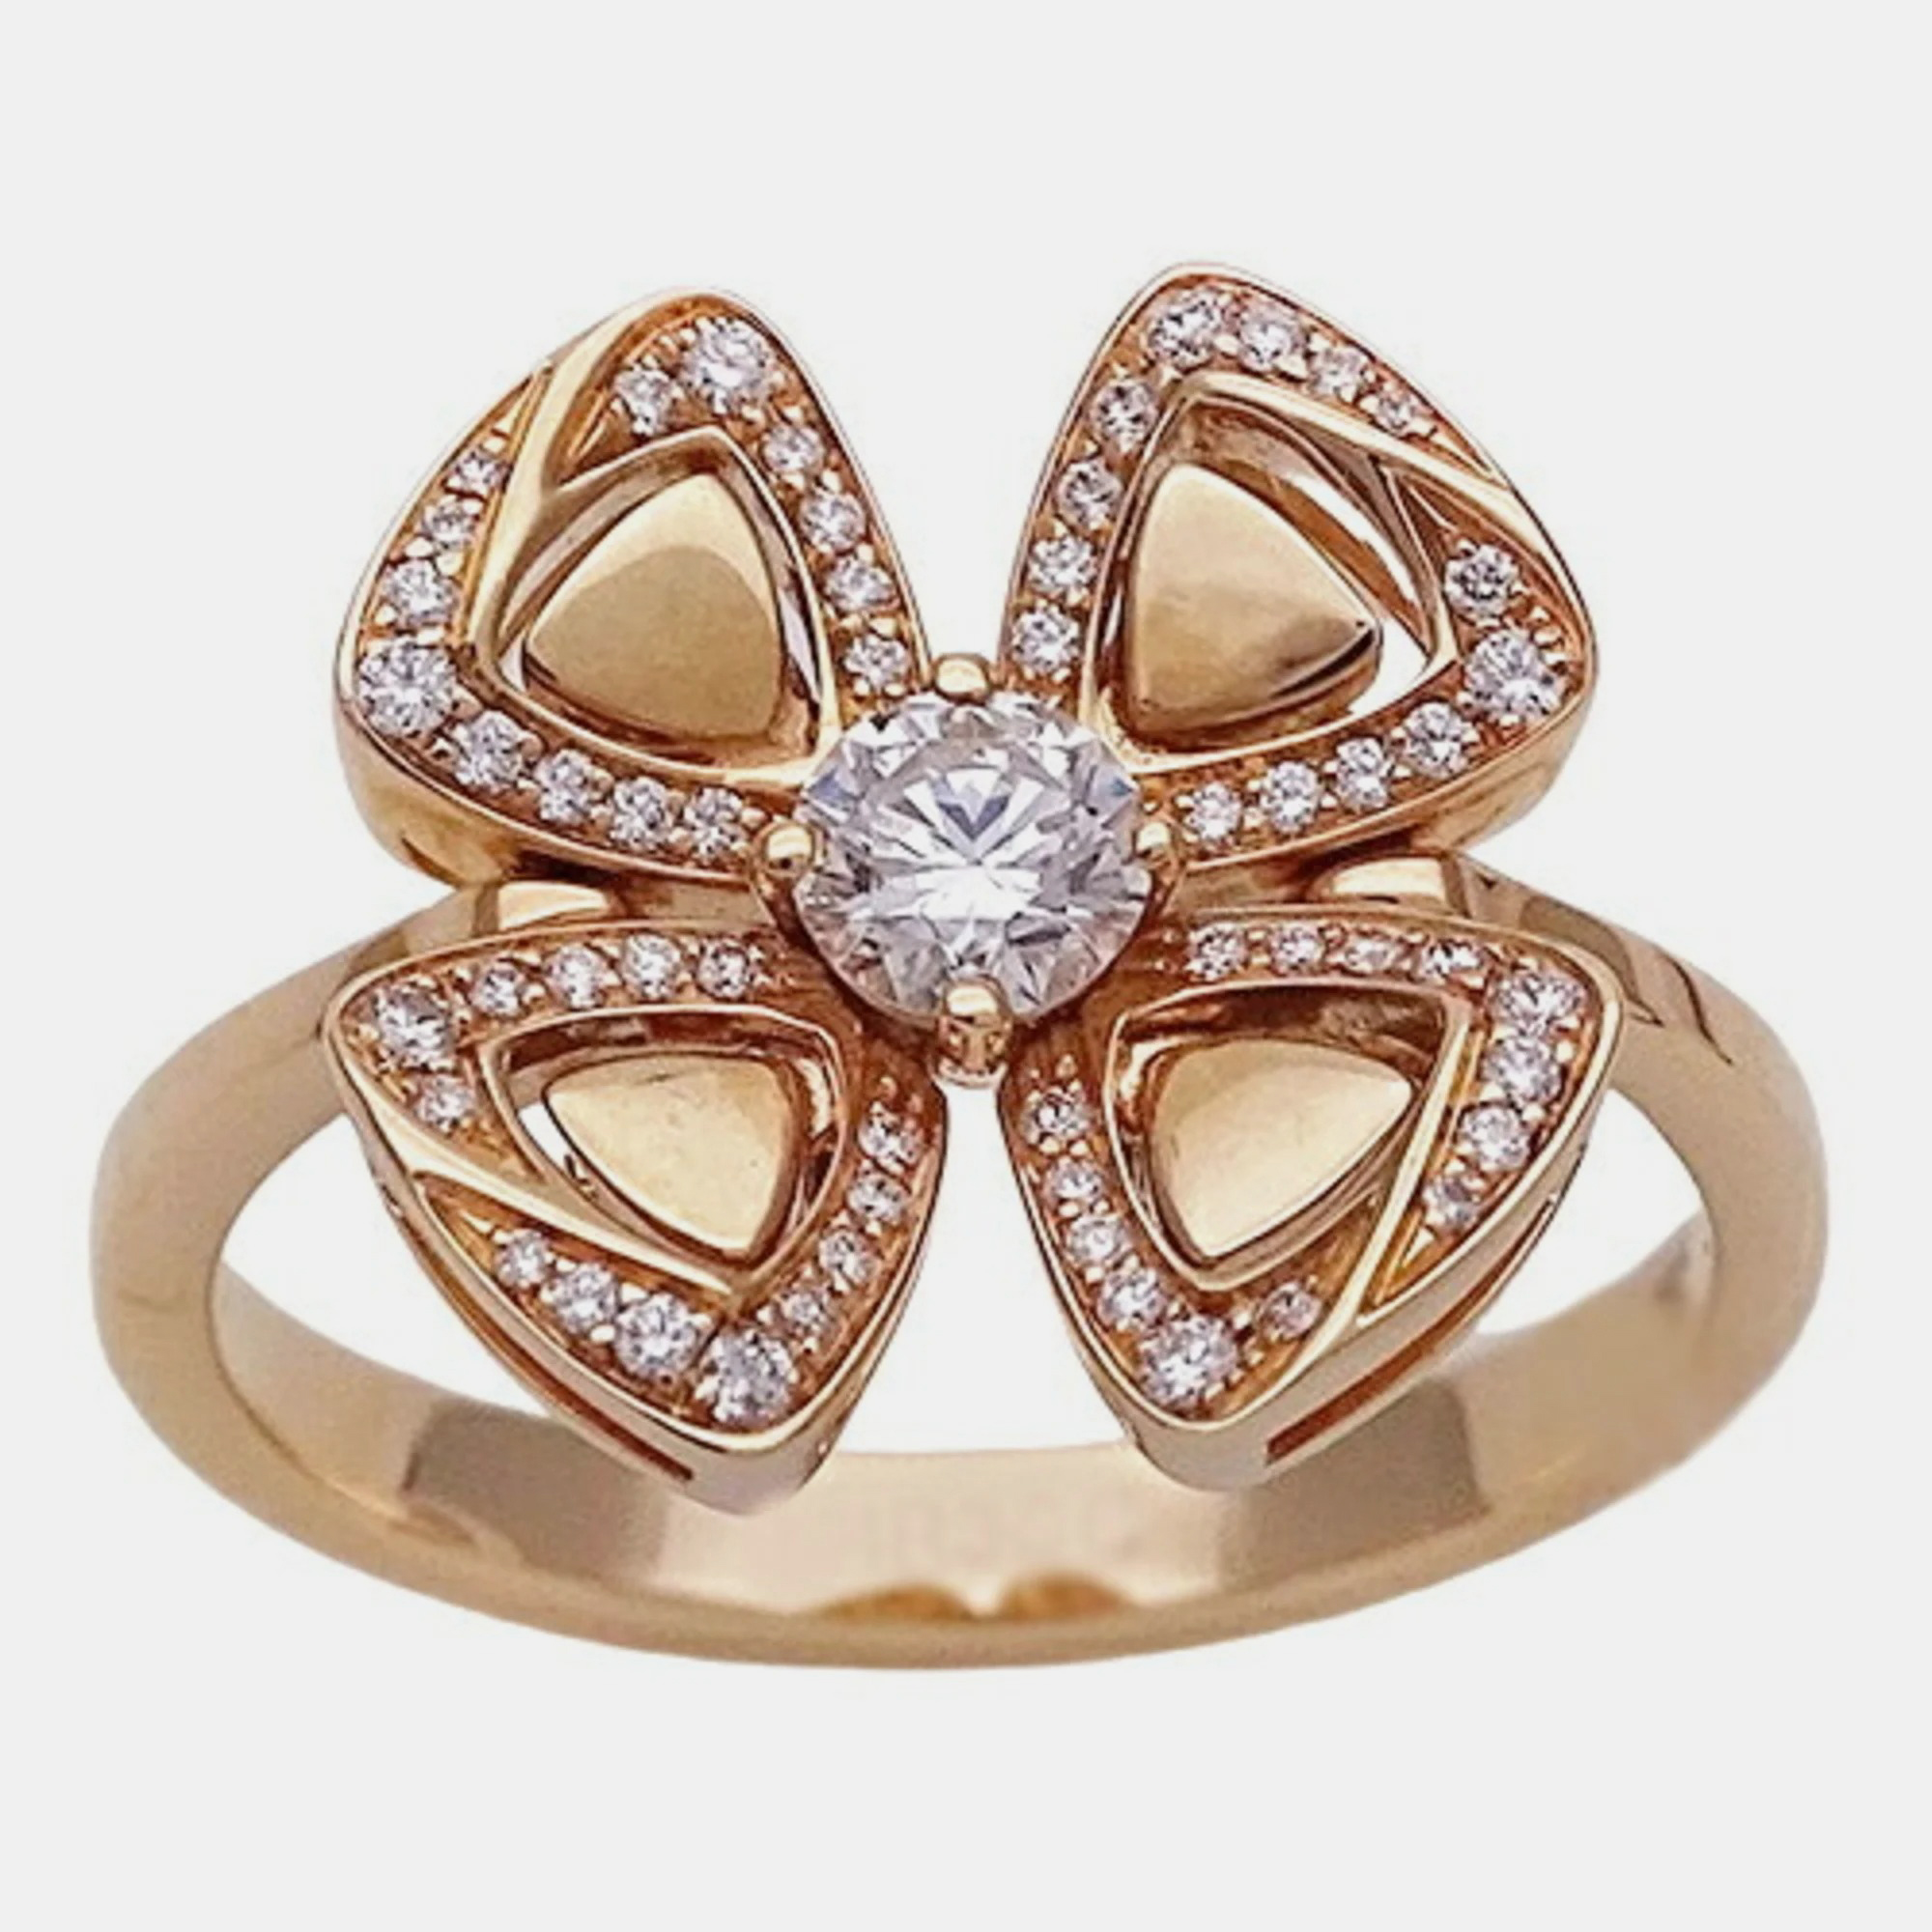 Bvlgari Fiorever 18K Rose Gold Diamond Ring EU 52